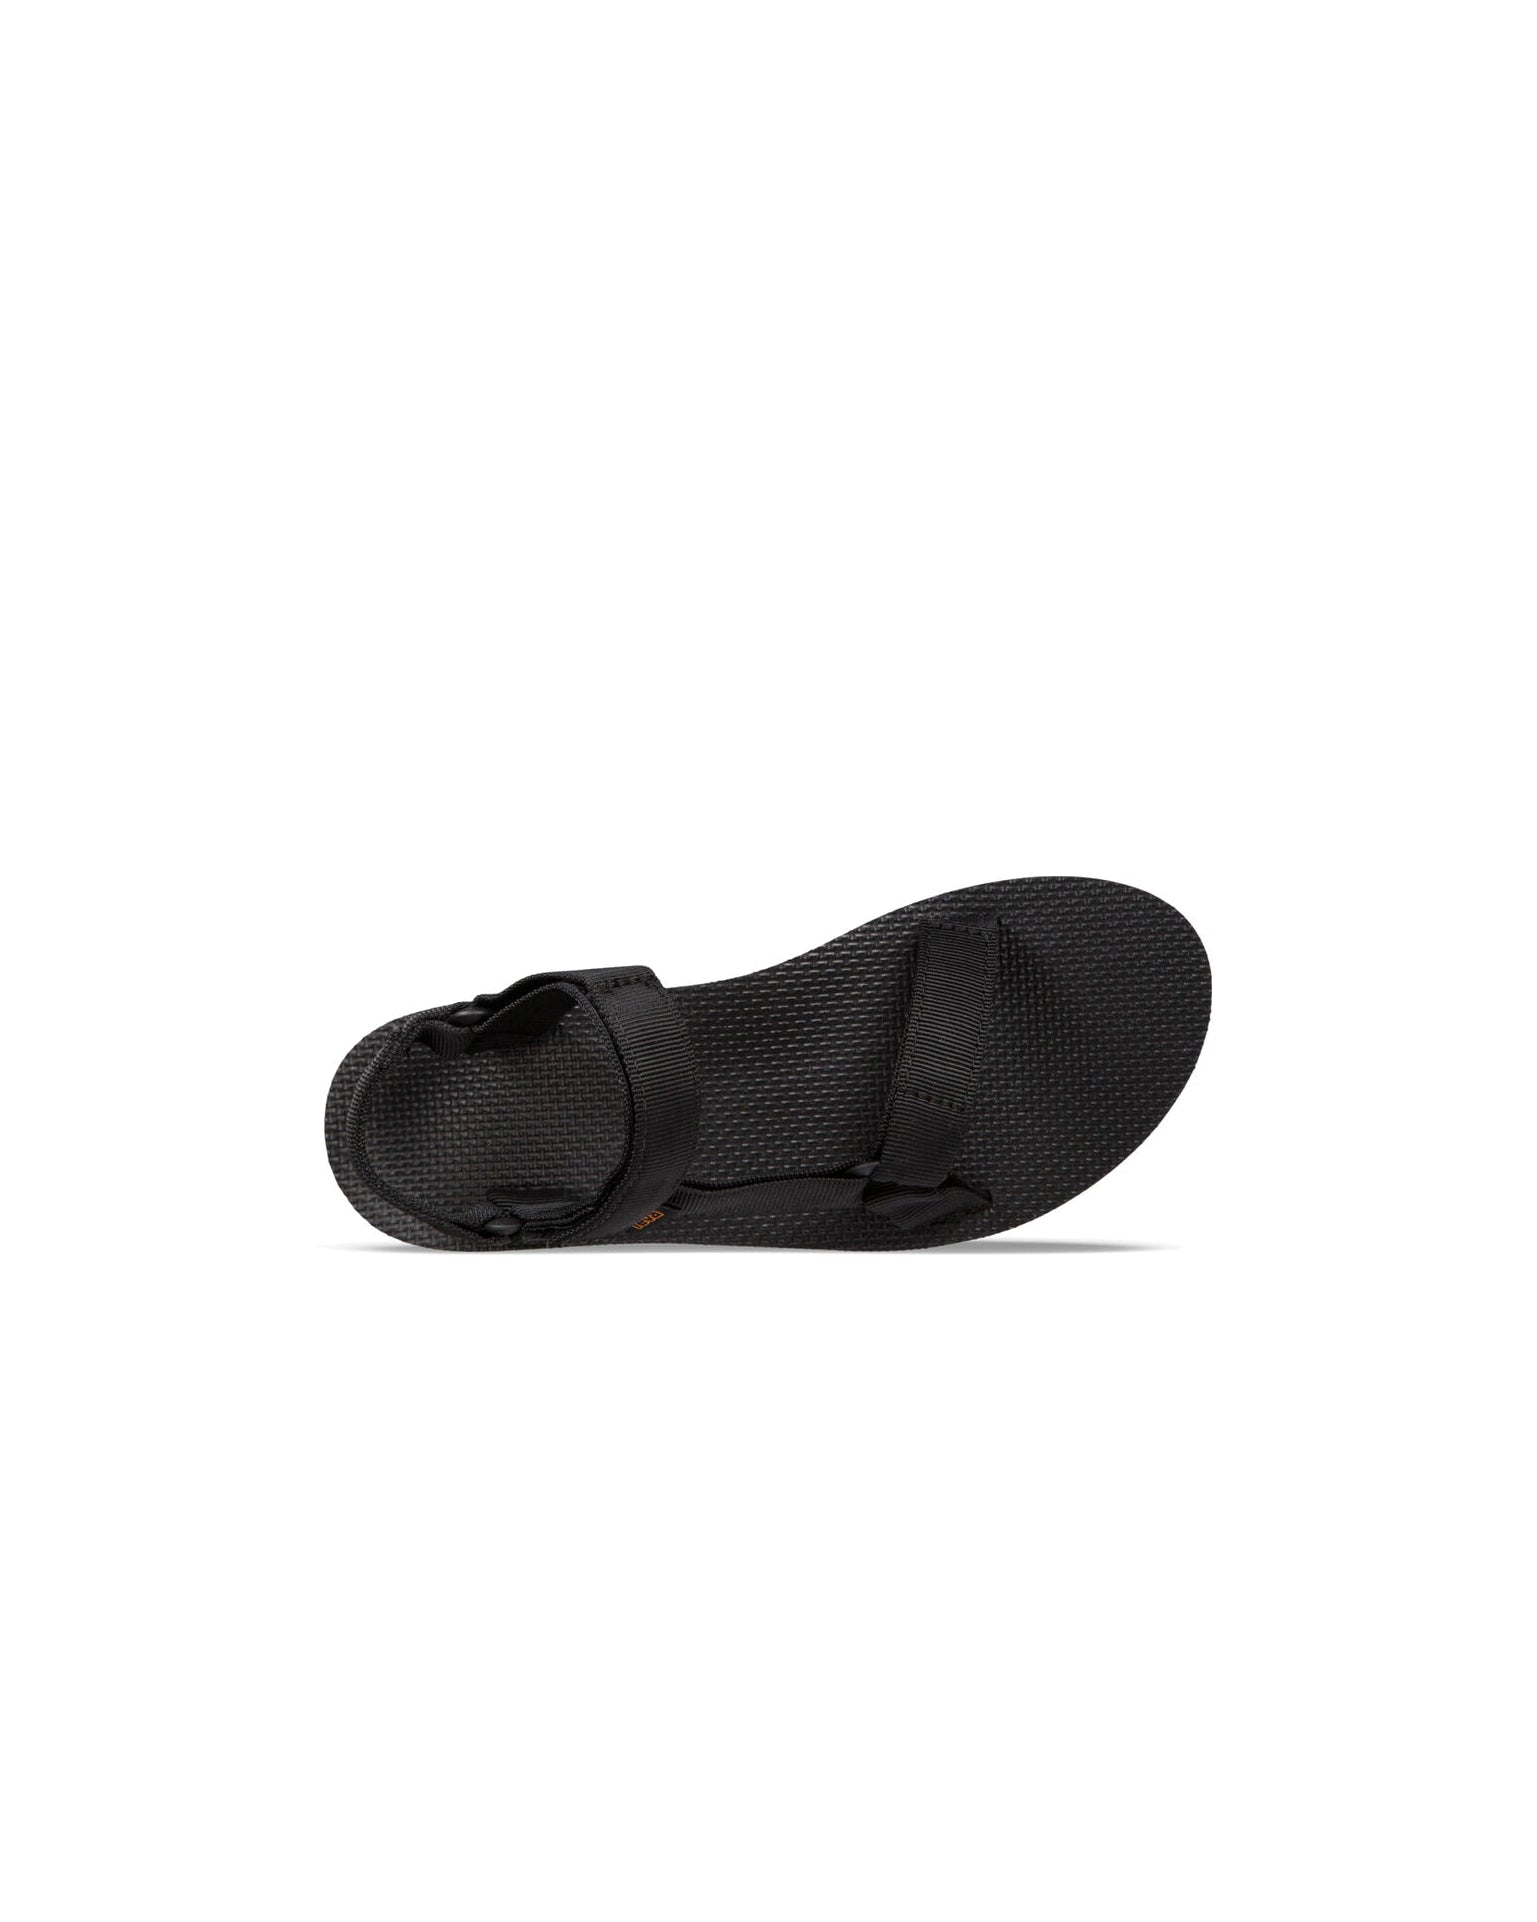 W Midform Universal Sandals - Black